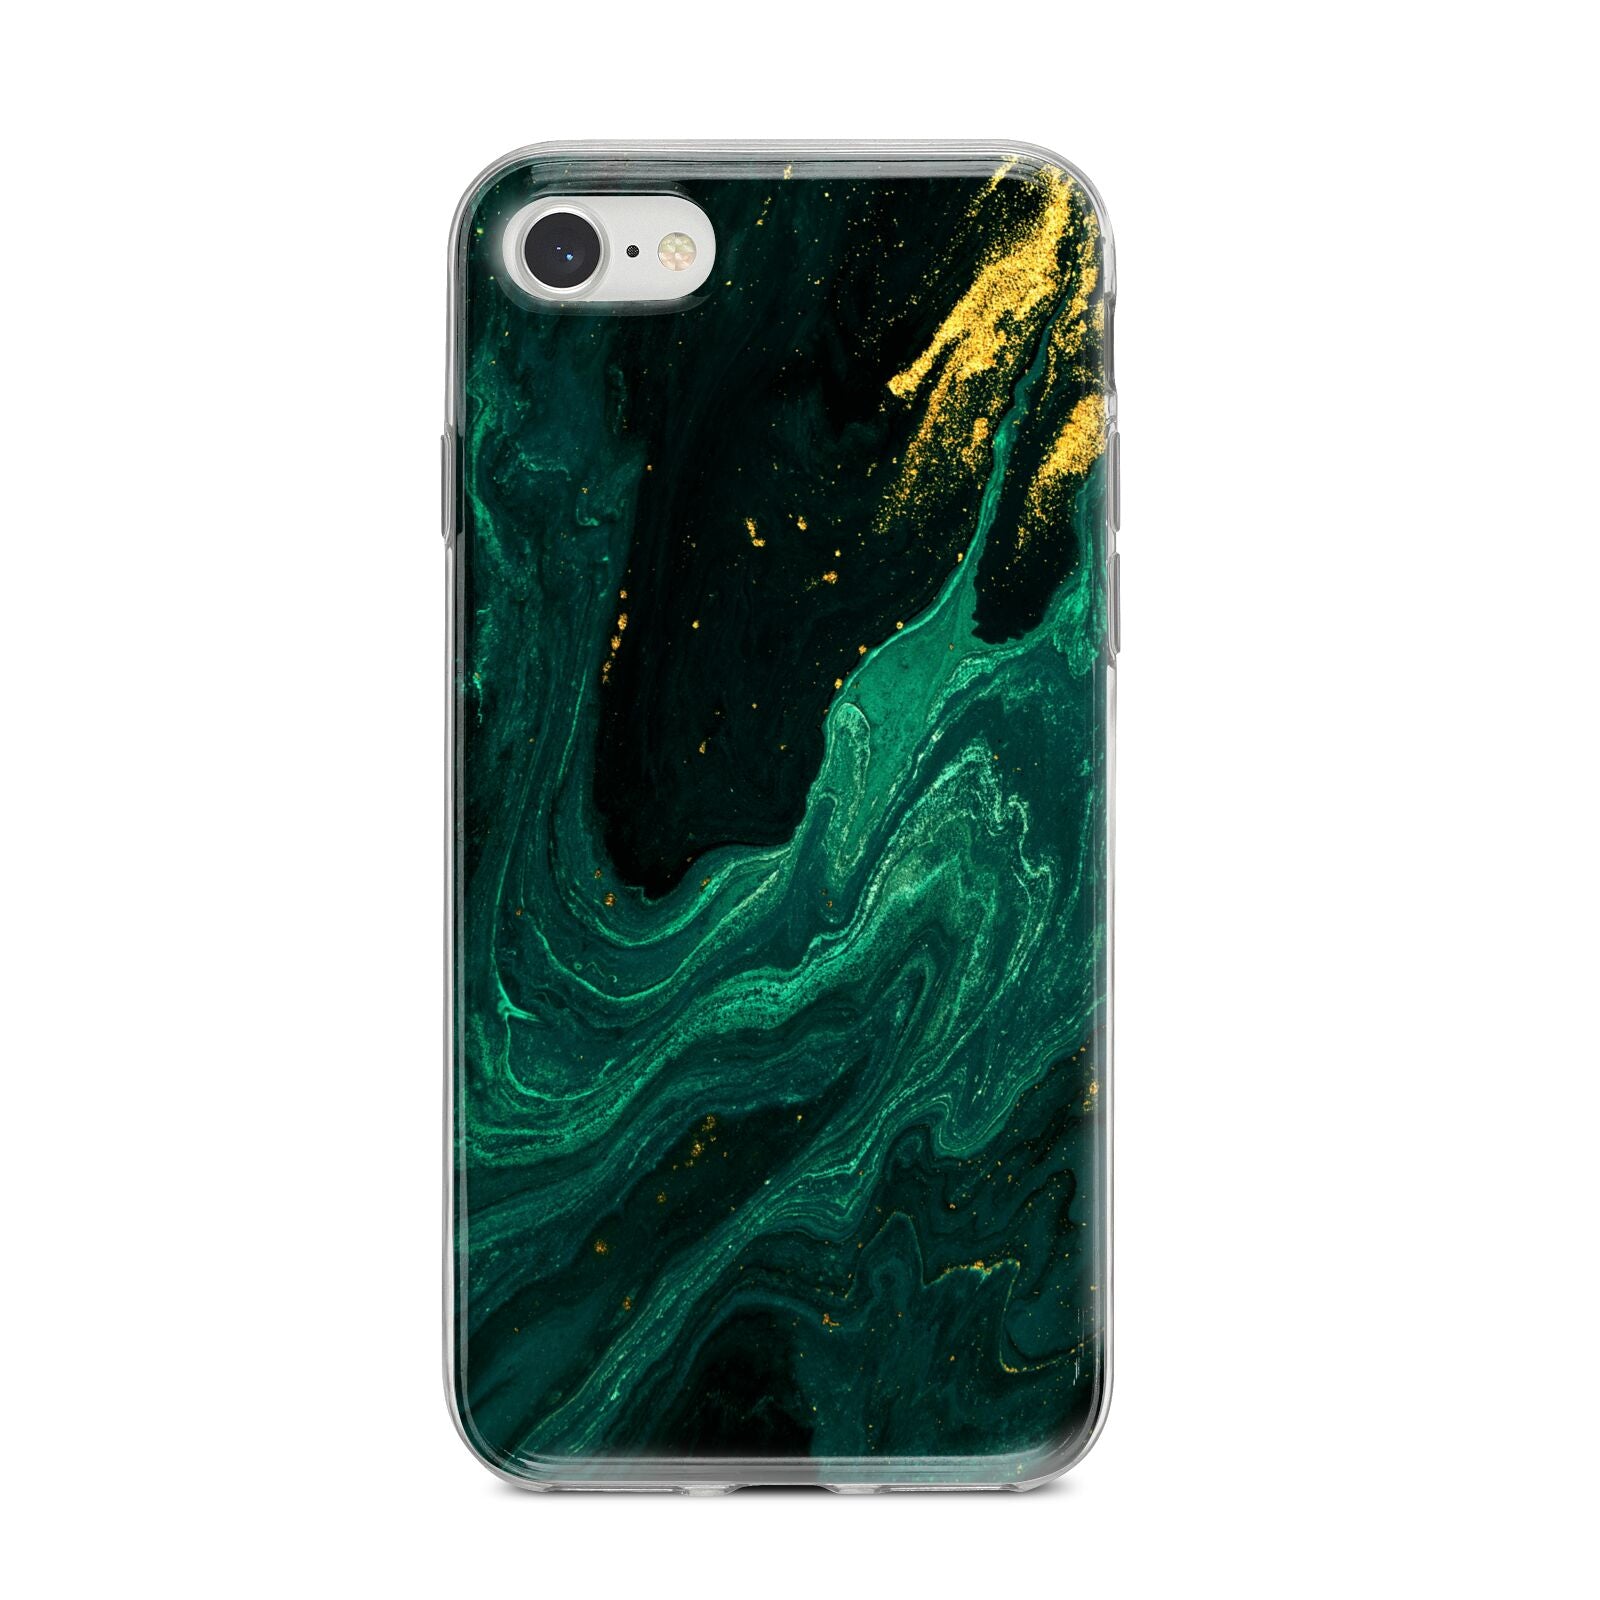 Emerald Green iPhone 8 Bumper Case on Silver iPhone